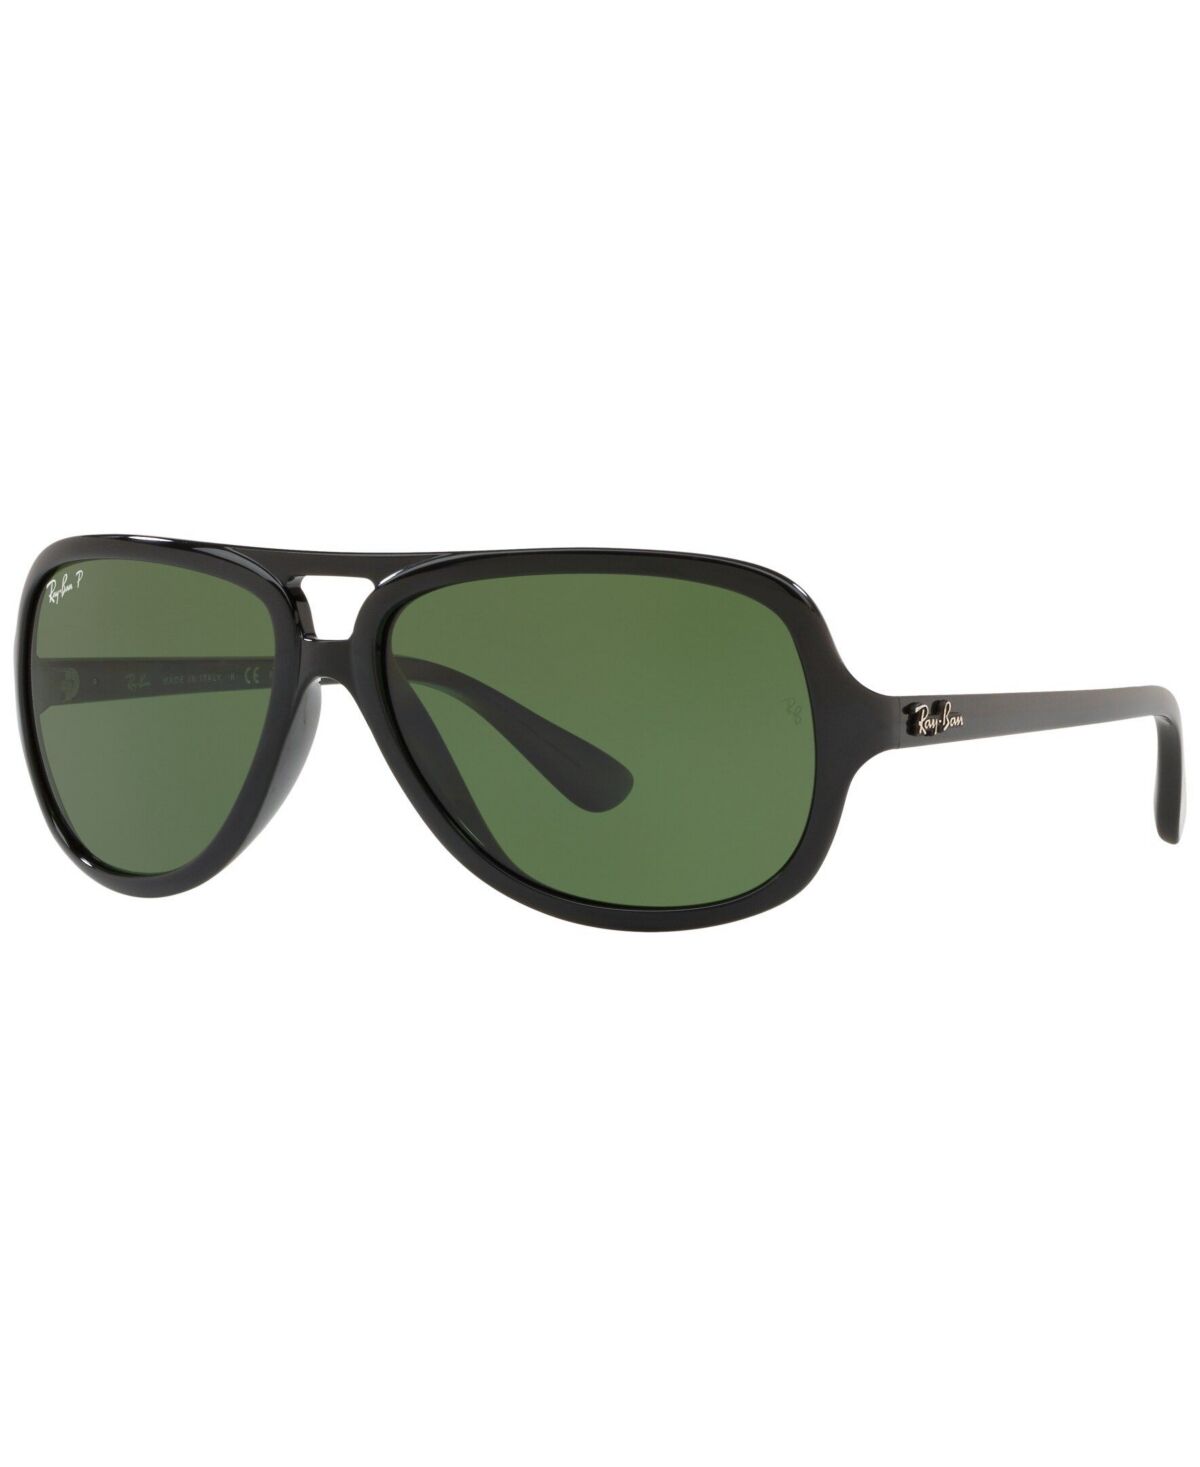 Ray-Ban Unisex Polarized Sunglasses, RB4162 - Black